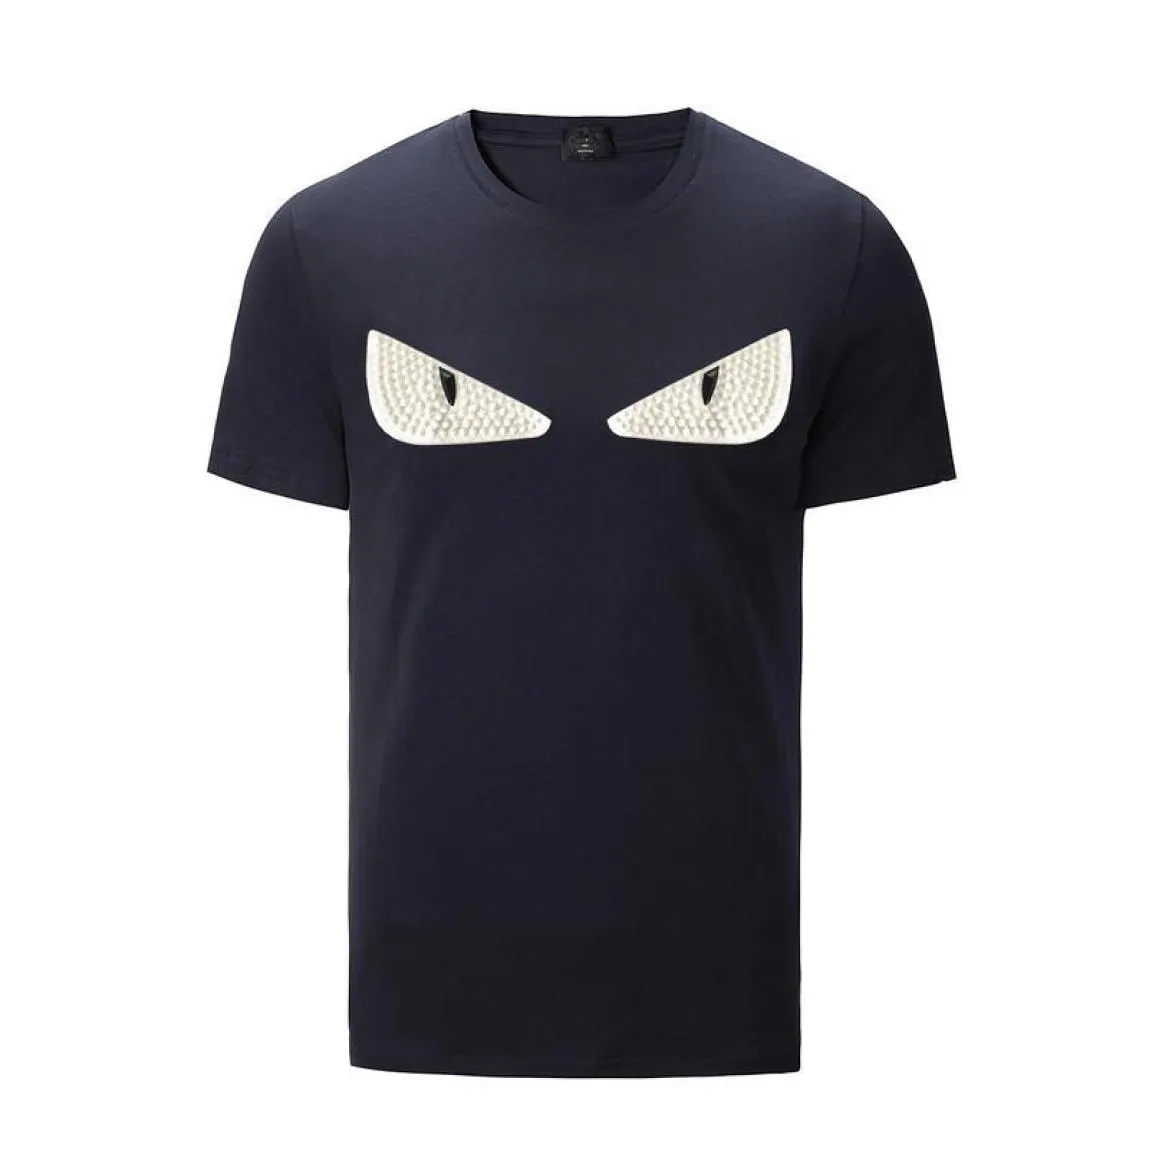 Mens Tshirts 2019 SpringSummer New Brand Designer Short Sleeves Fashion Printed Eyes Tops Casual Outdoor Clothes 6 Colors M3XL3246857